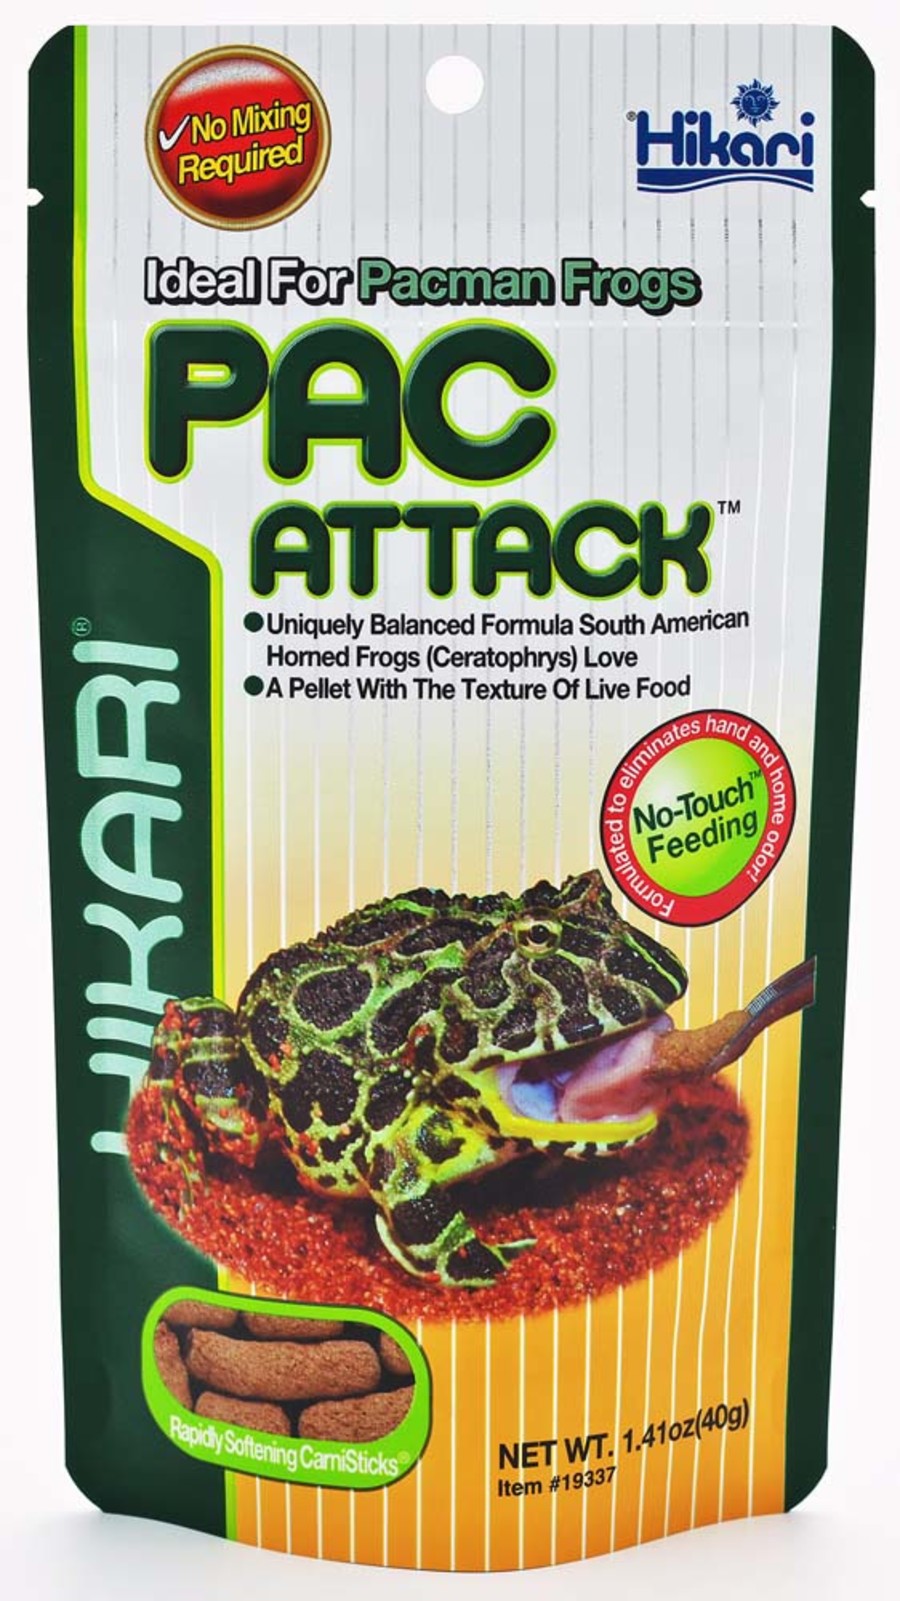 Hikari USA Packman Frog PAC Attack Wet Food